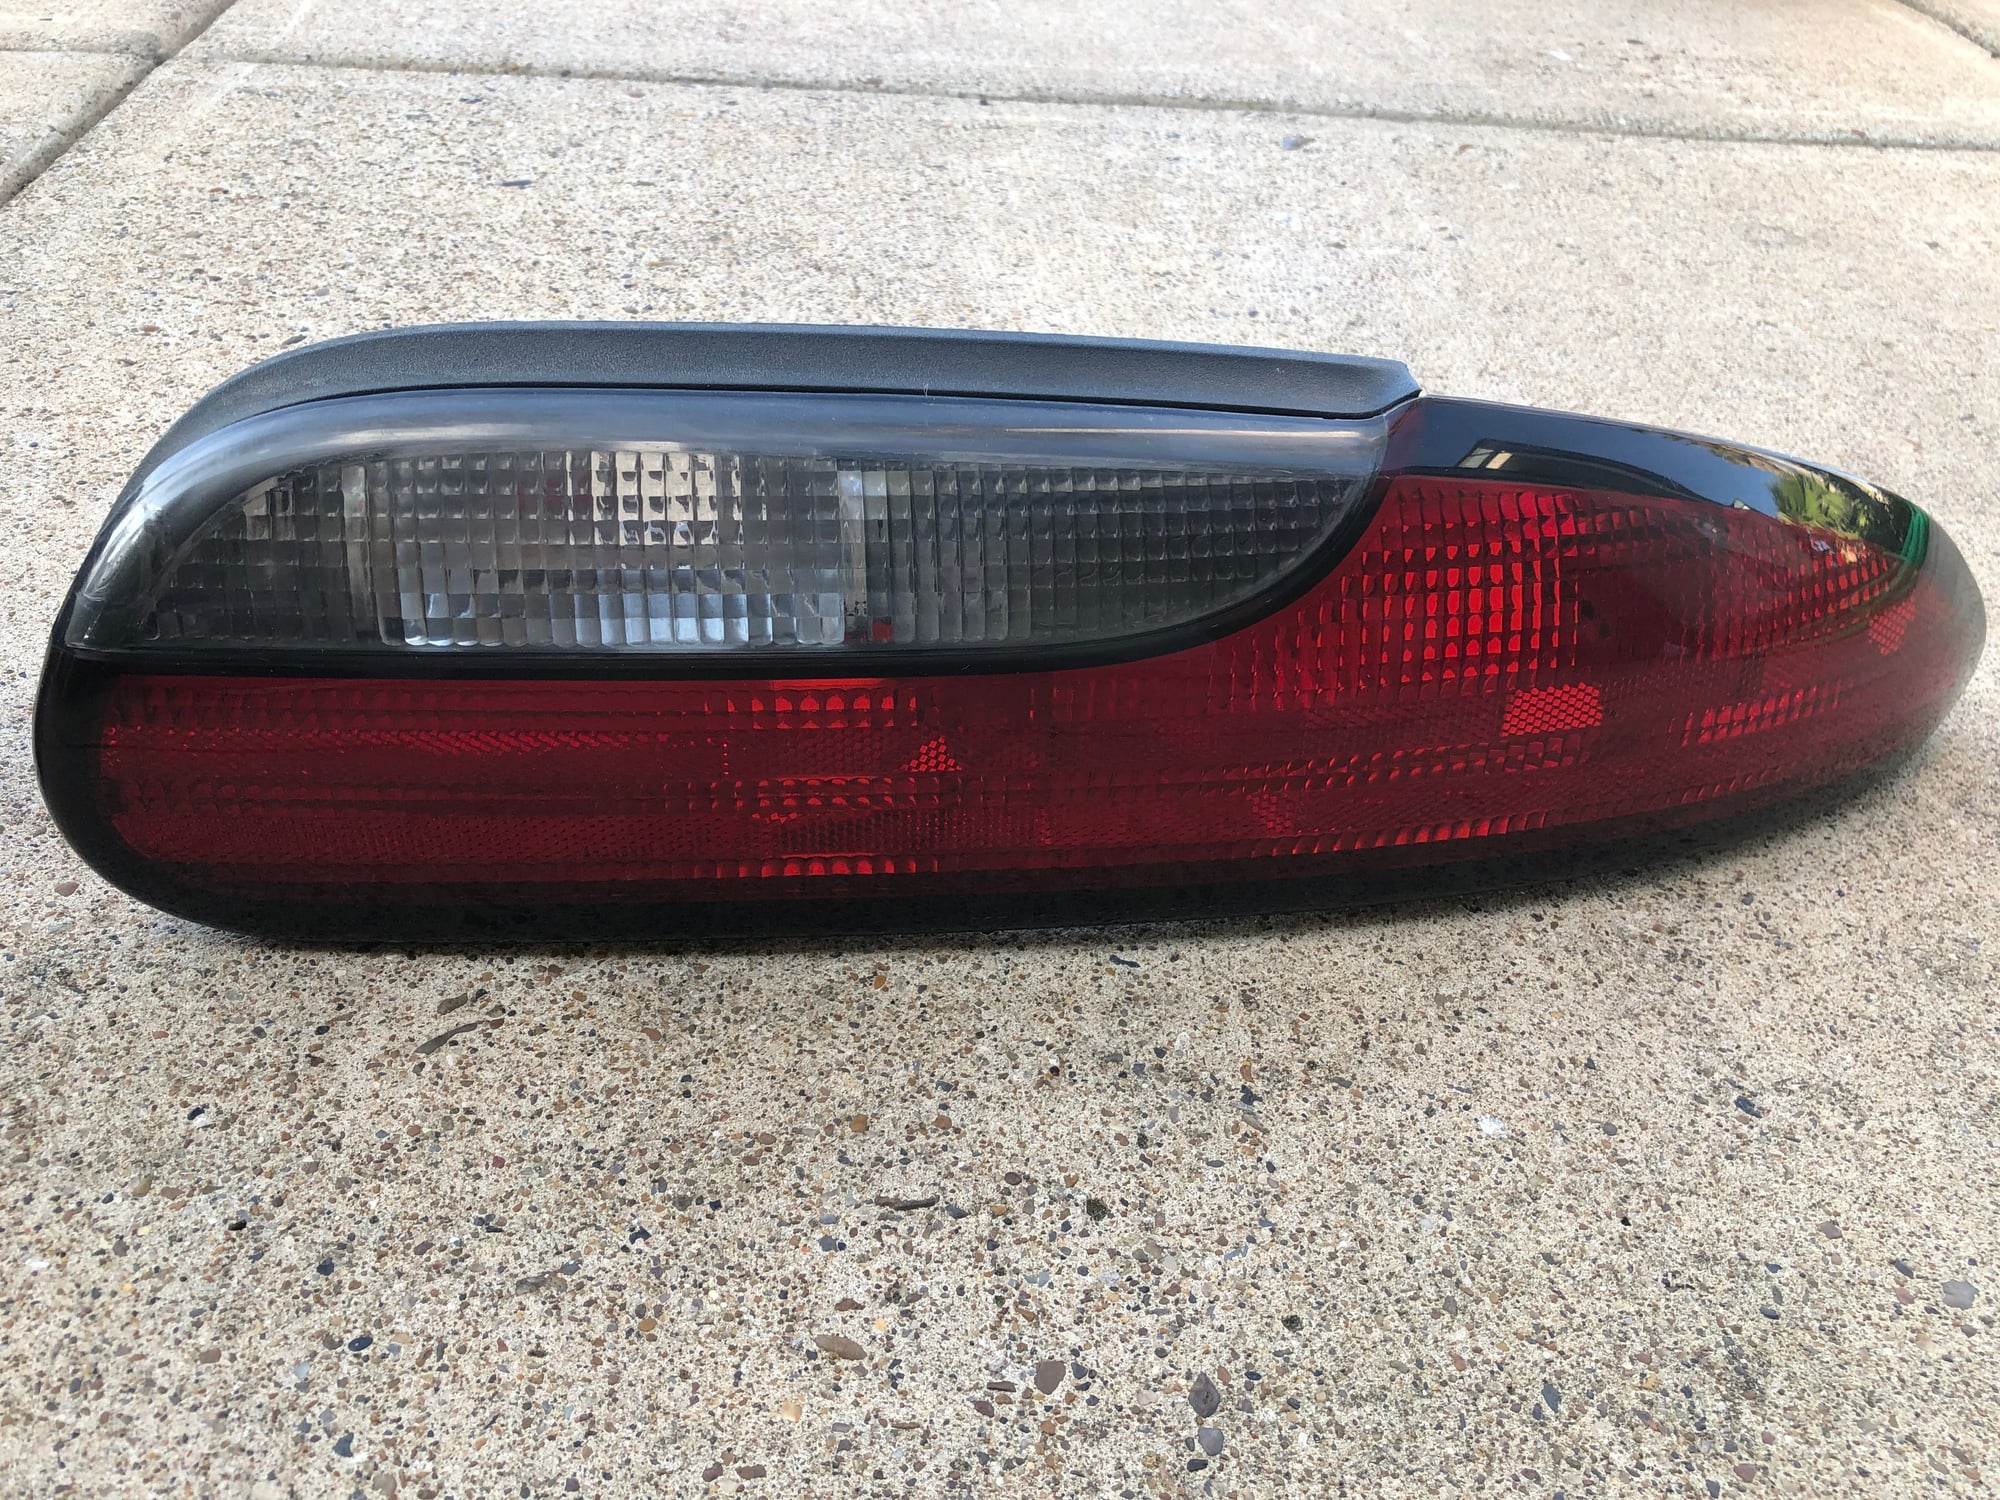  - LT1 93-97 Camaro Tail Lights - Harlingen, TX 78550, United States